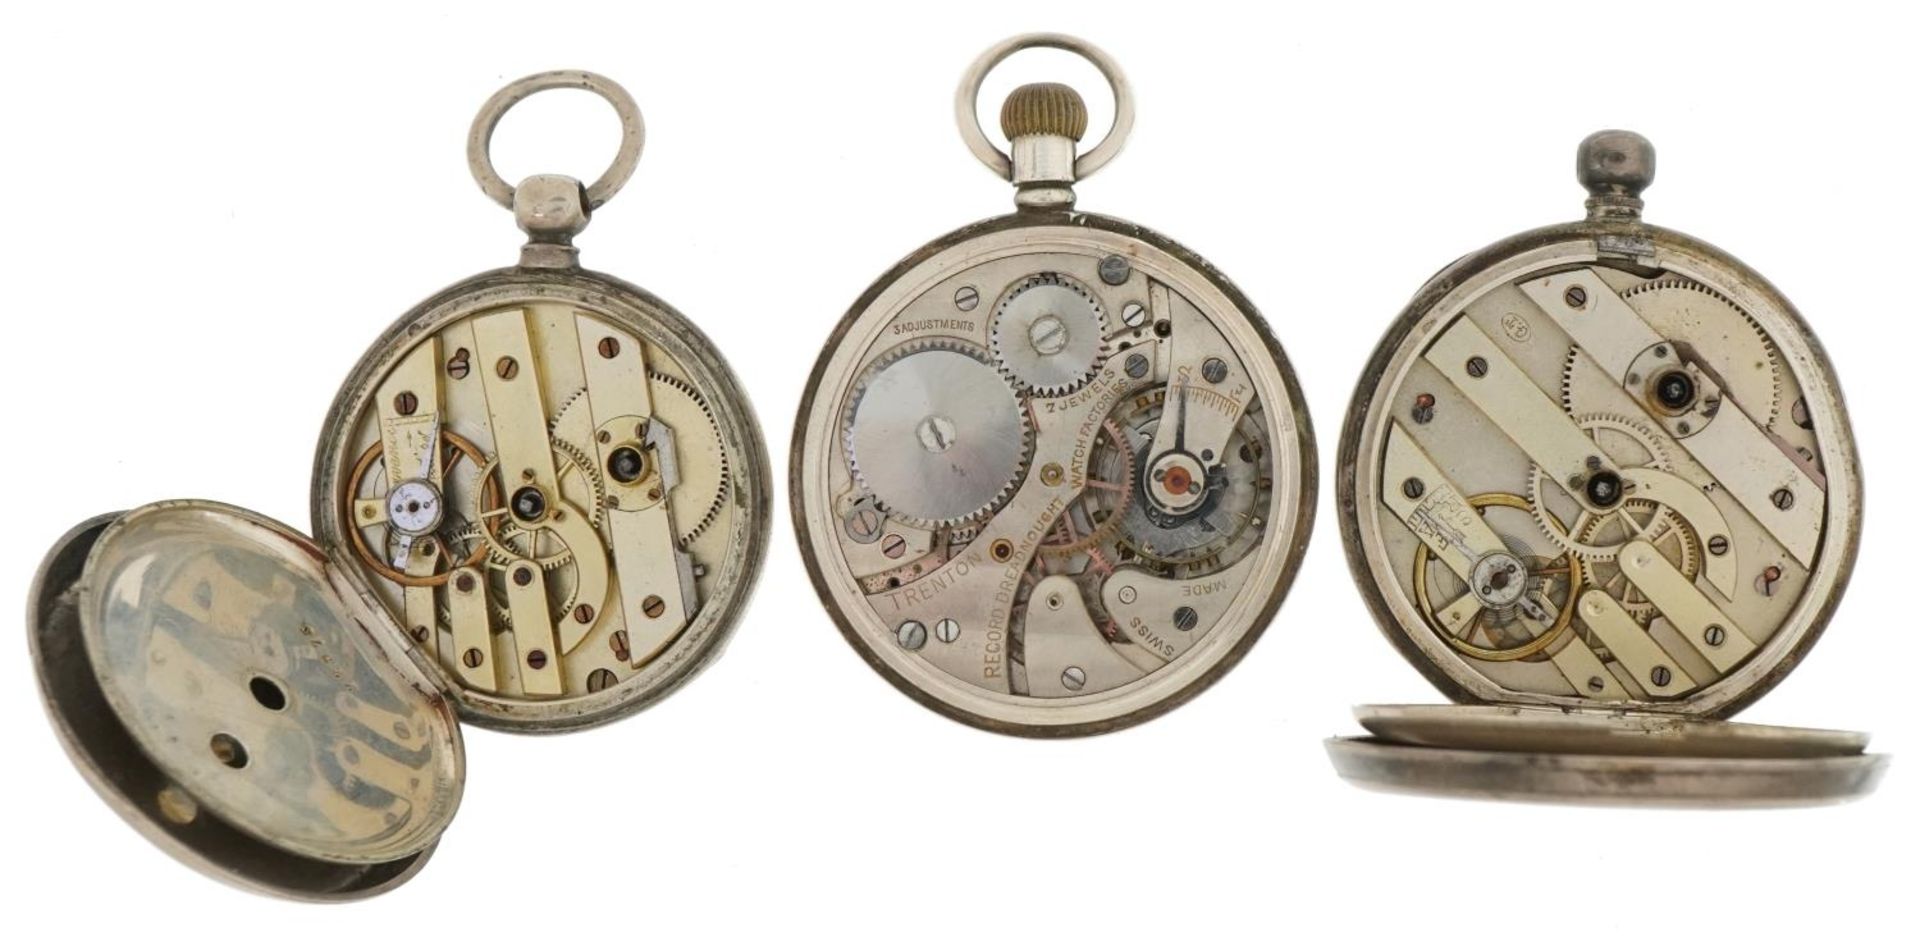 Two gentlemen's silver open face pocket watches and a ladies silver open face pocket watch including - Image 3 of 6